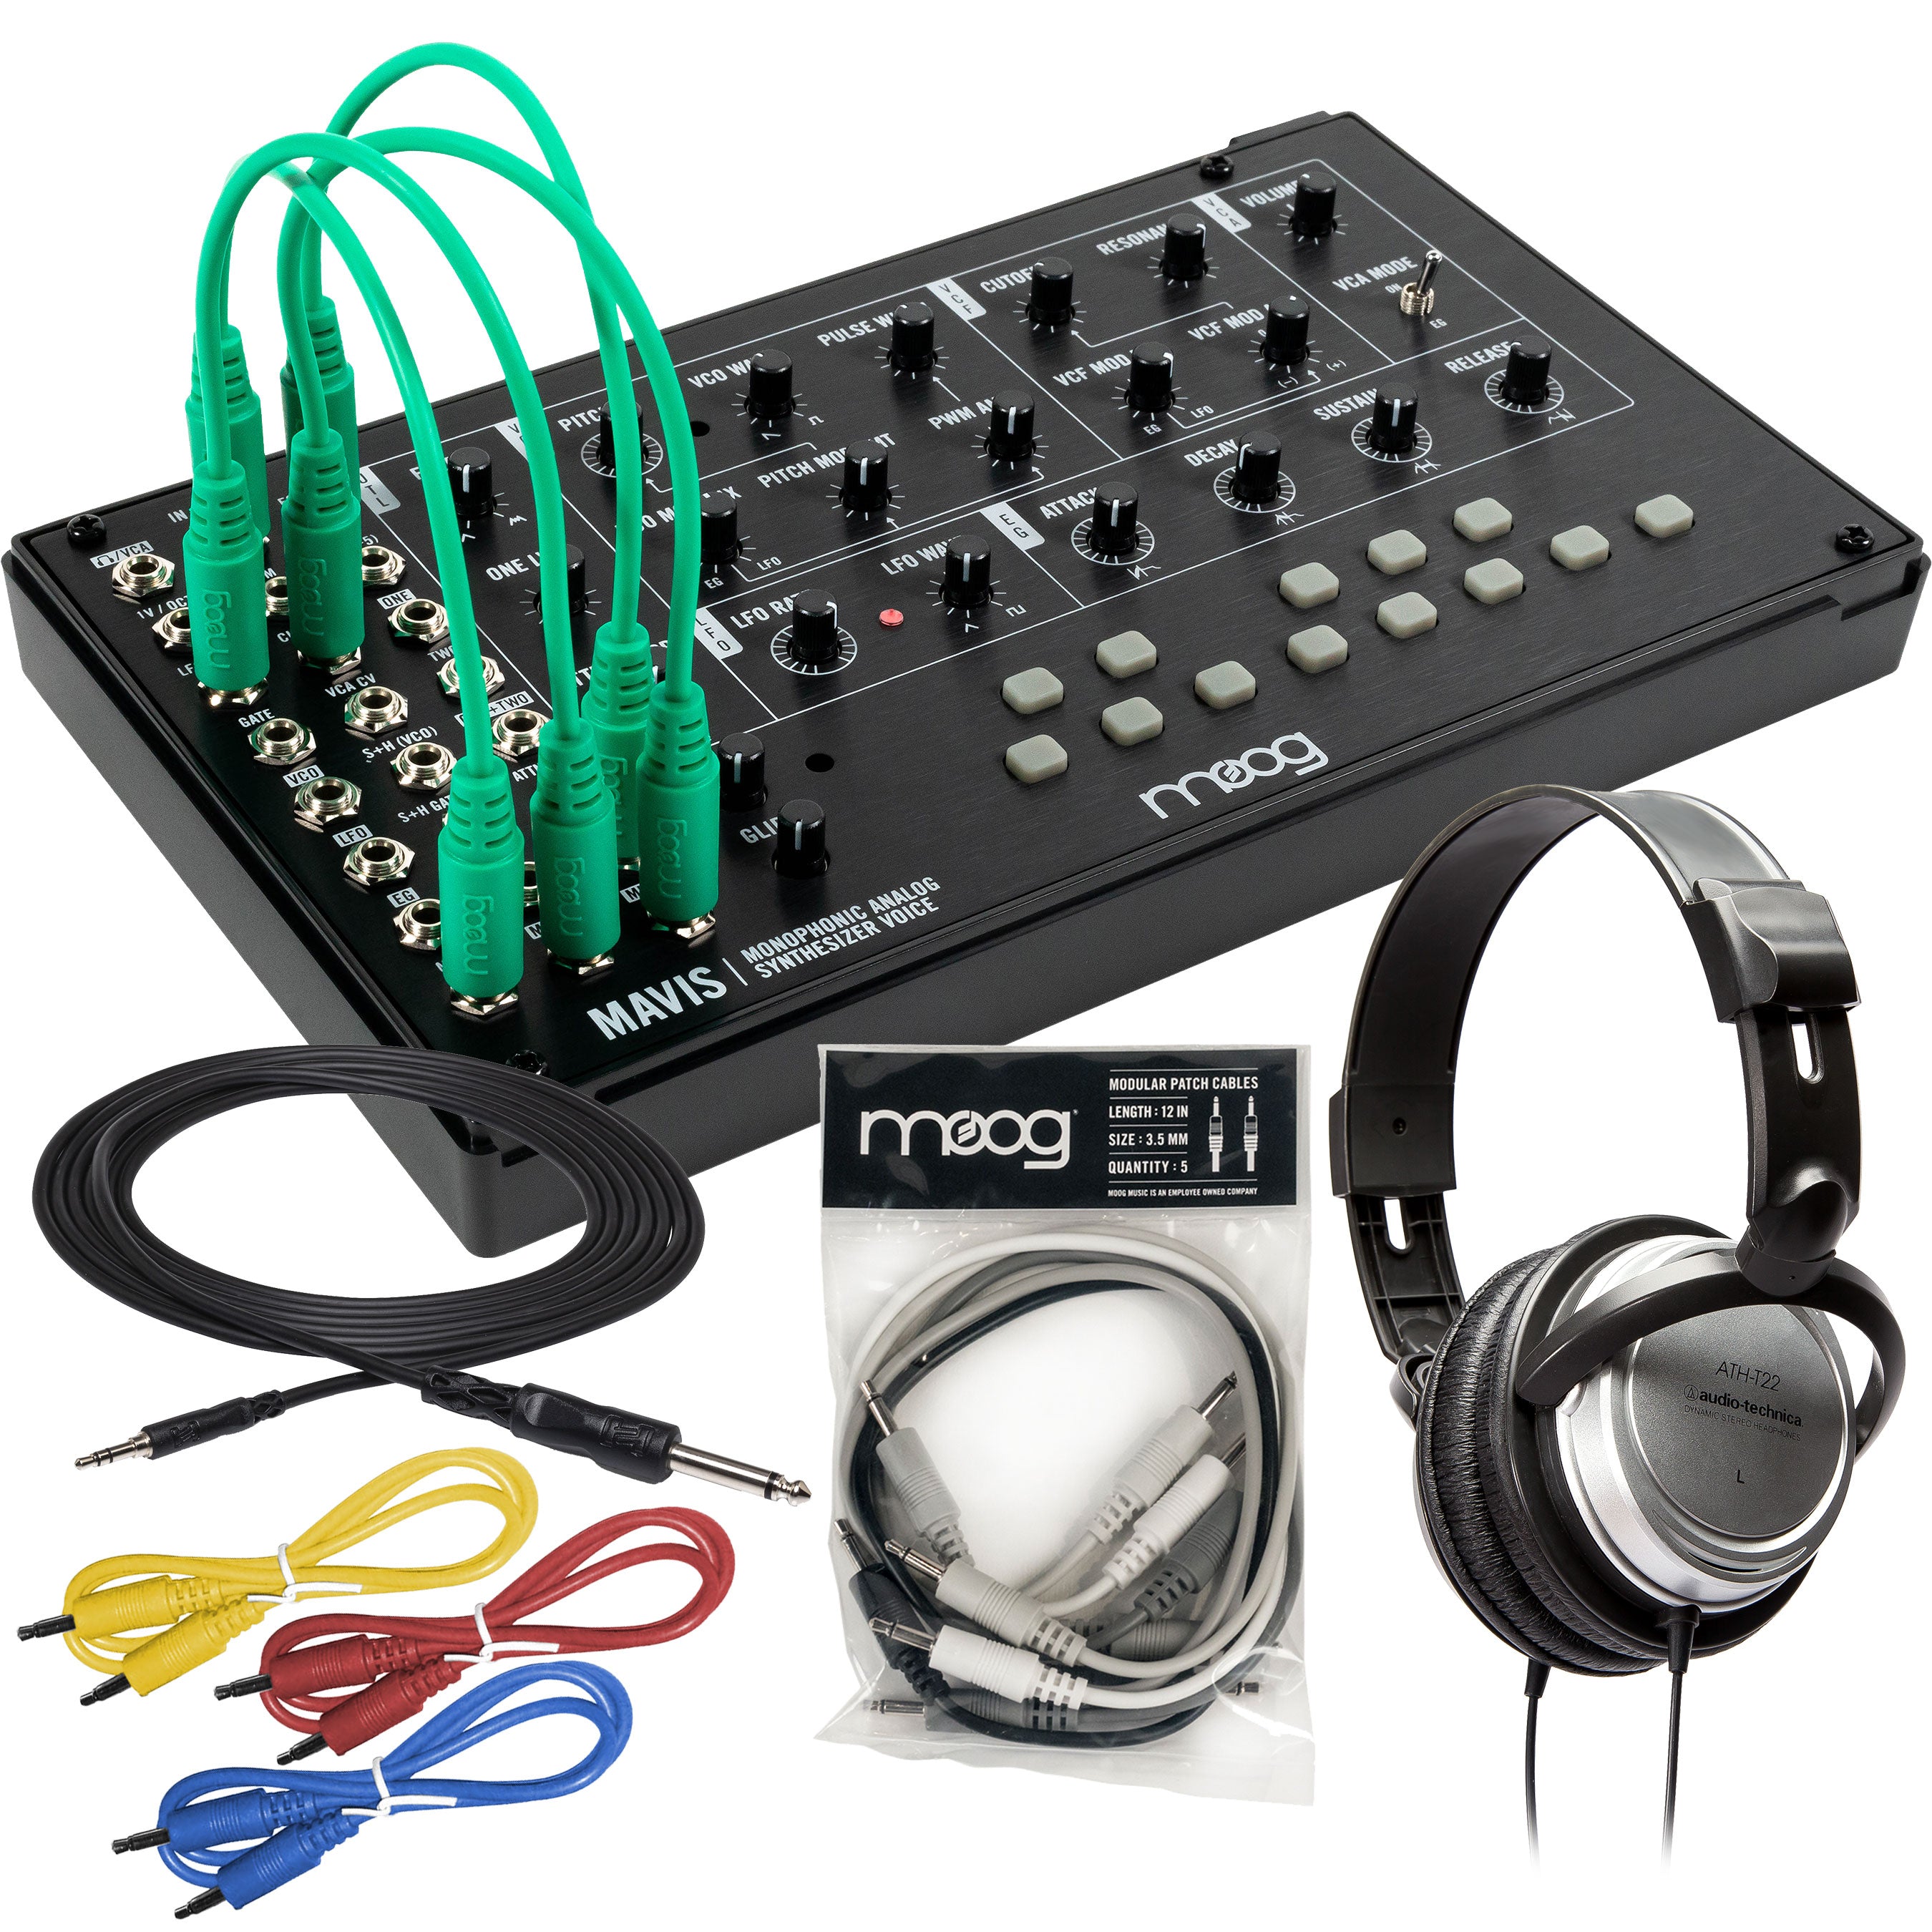 Moog Mavis Build-it-Yourself Analog Synthesizer STUDIO KIT